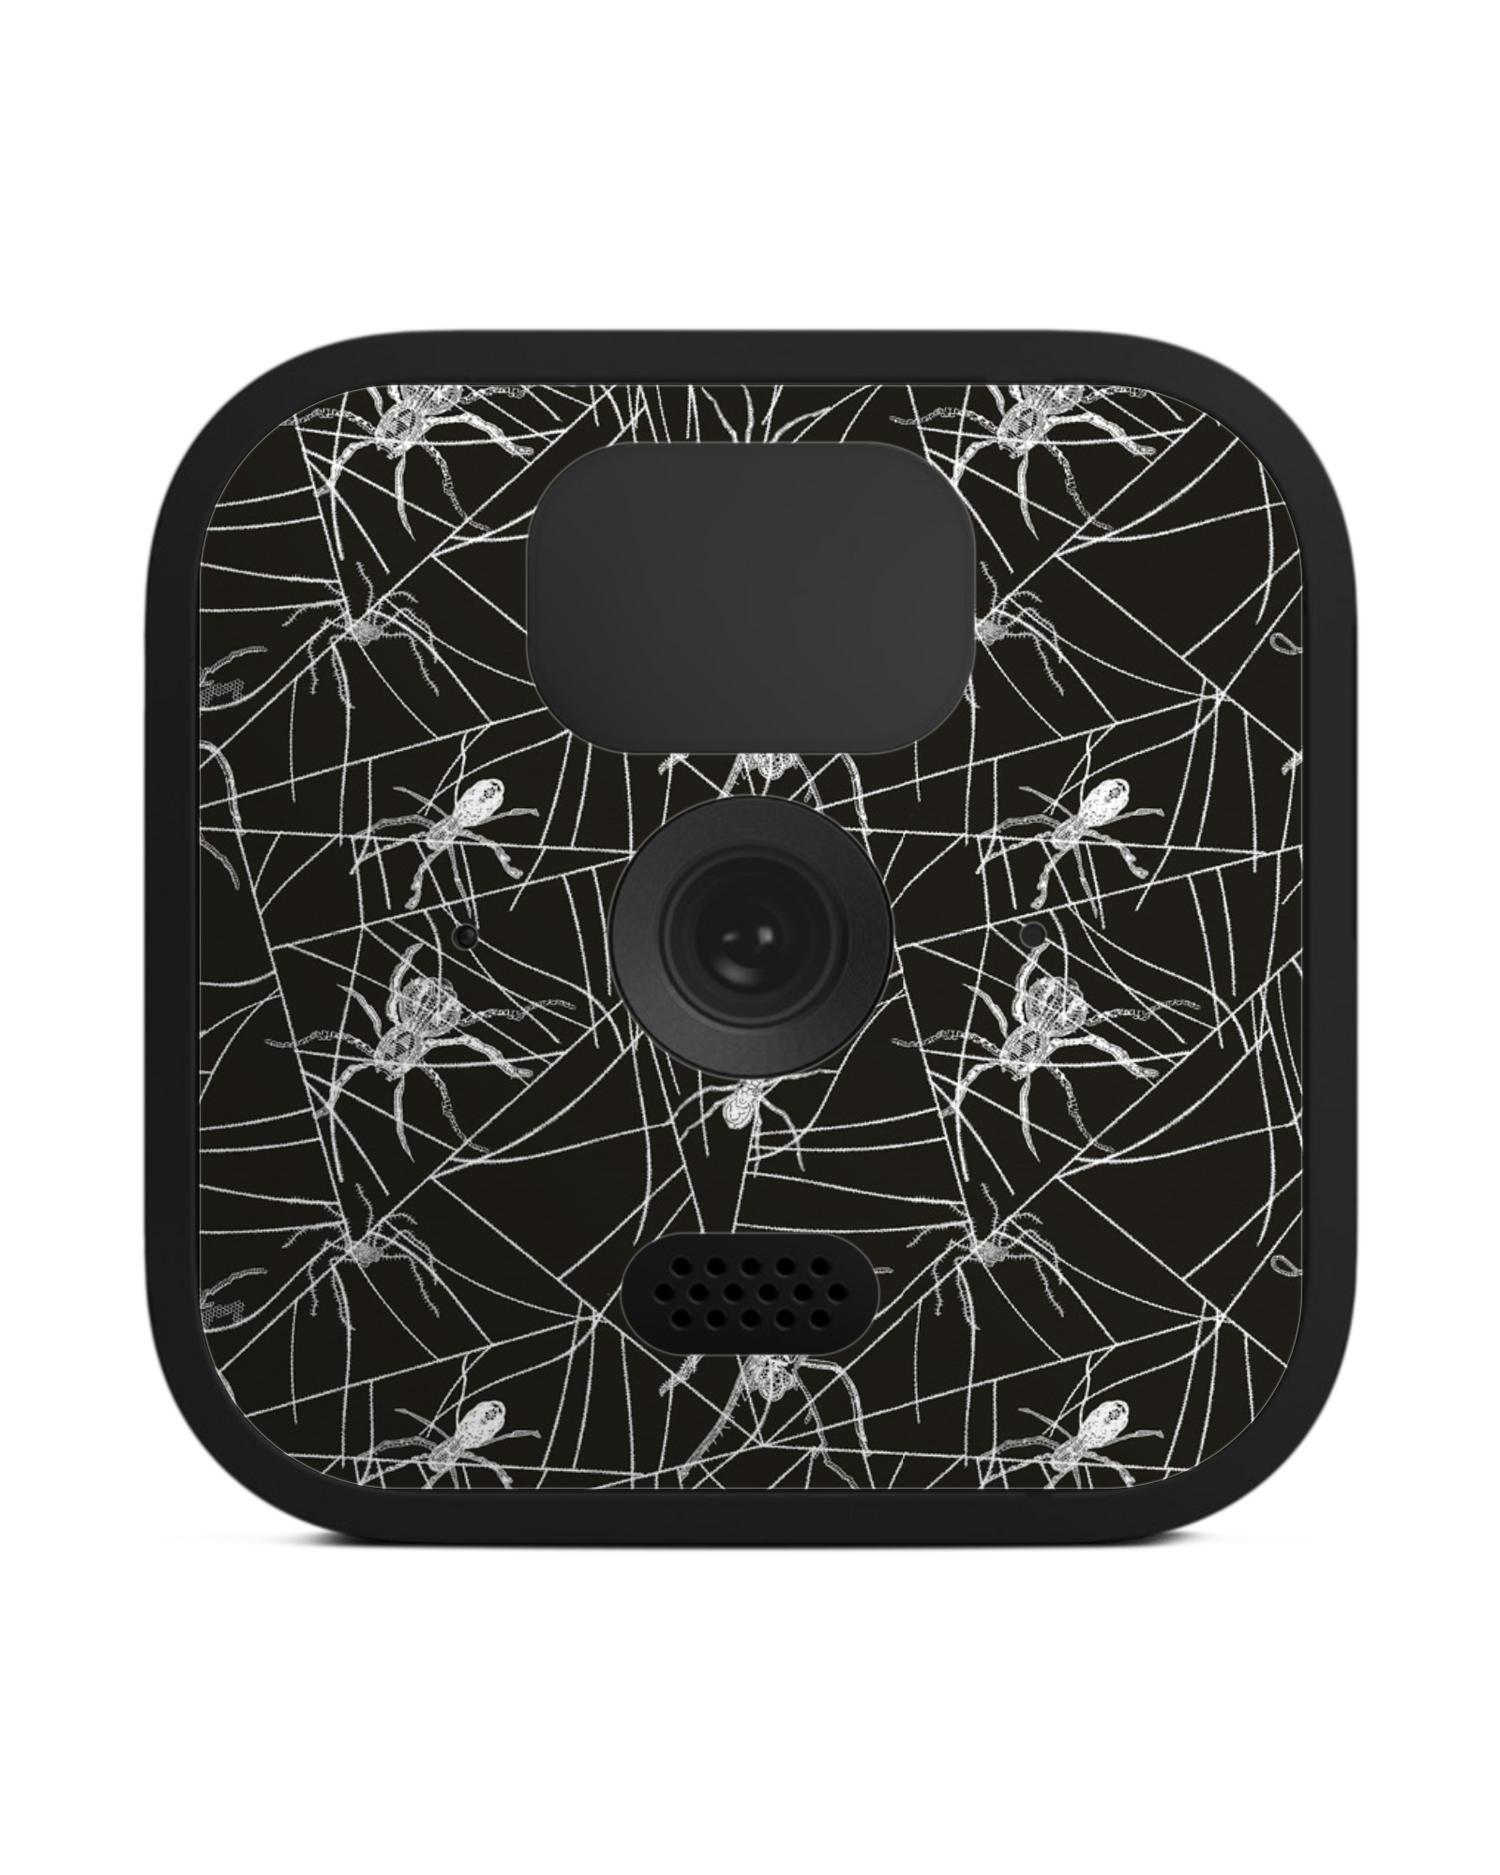 Spiders And Webs Kamera Aufkleber Blink Outdoor (2020): Vorderansicht